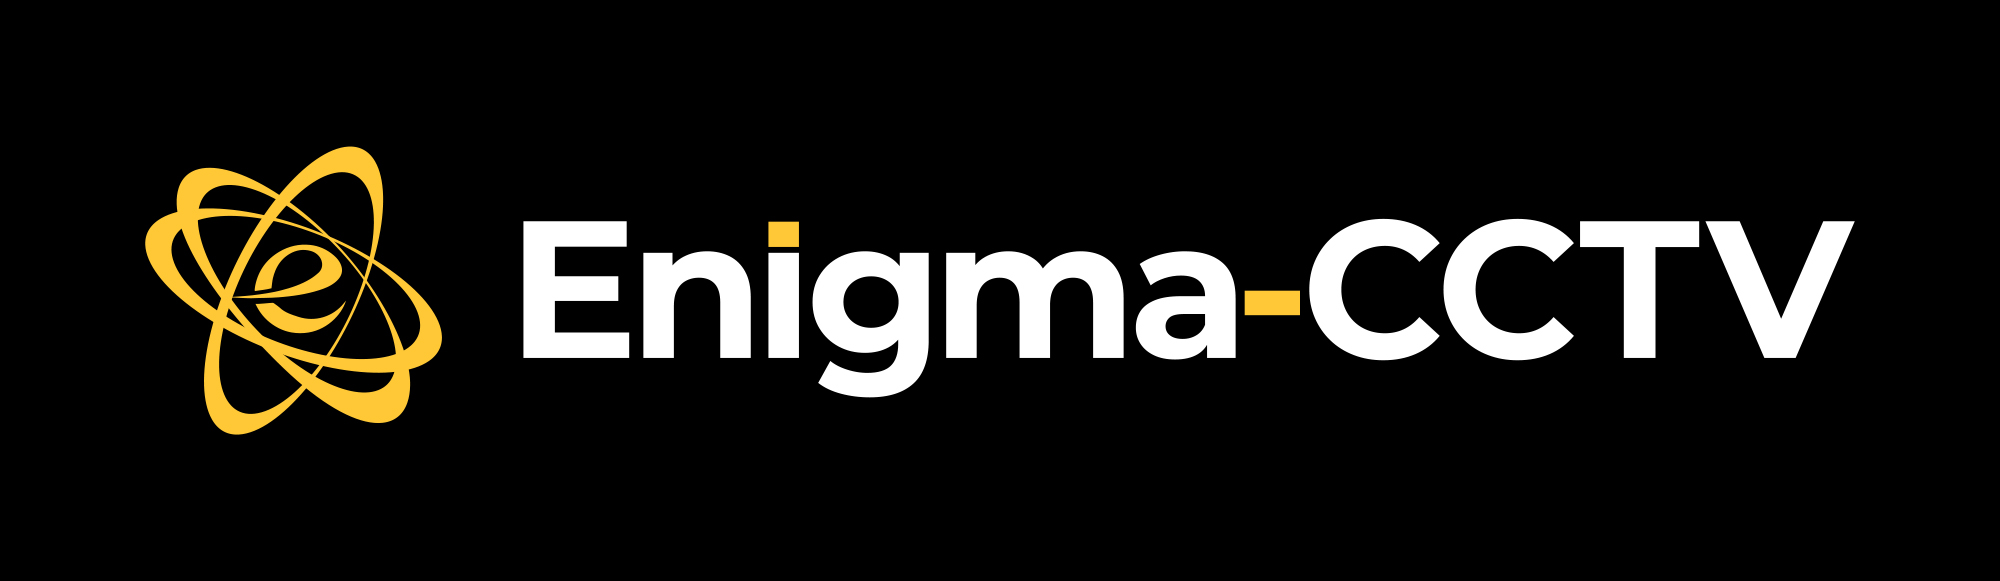 logo for Enigma CCTV Ltd